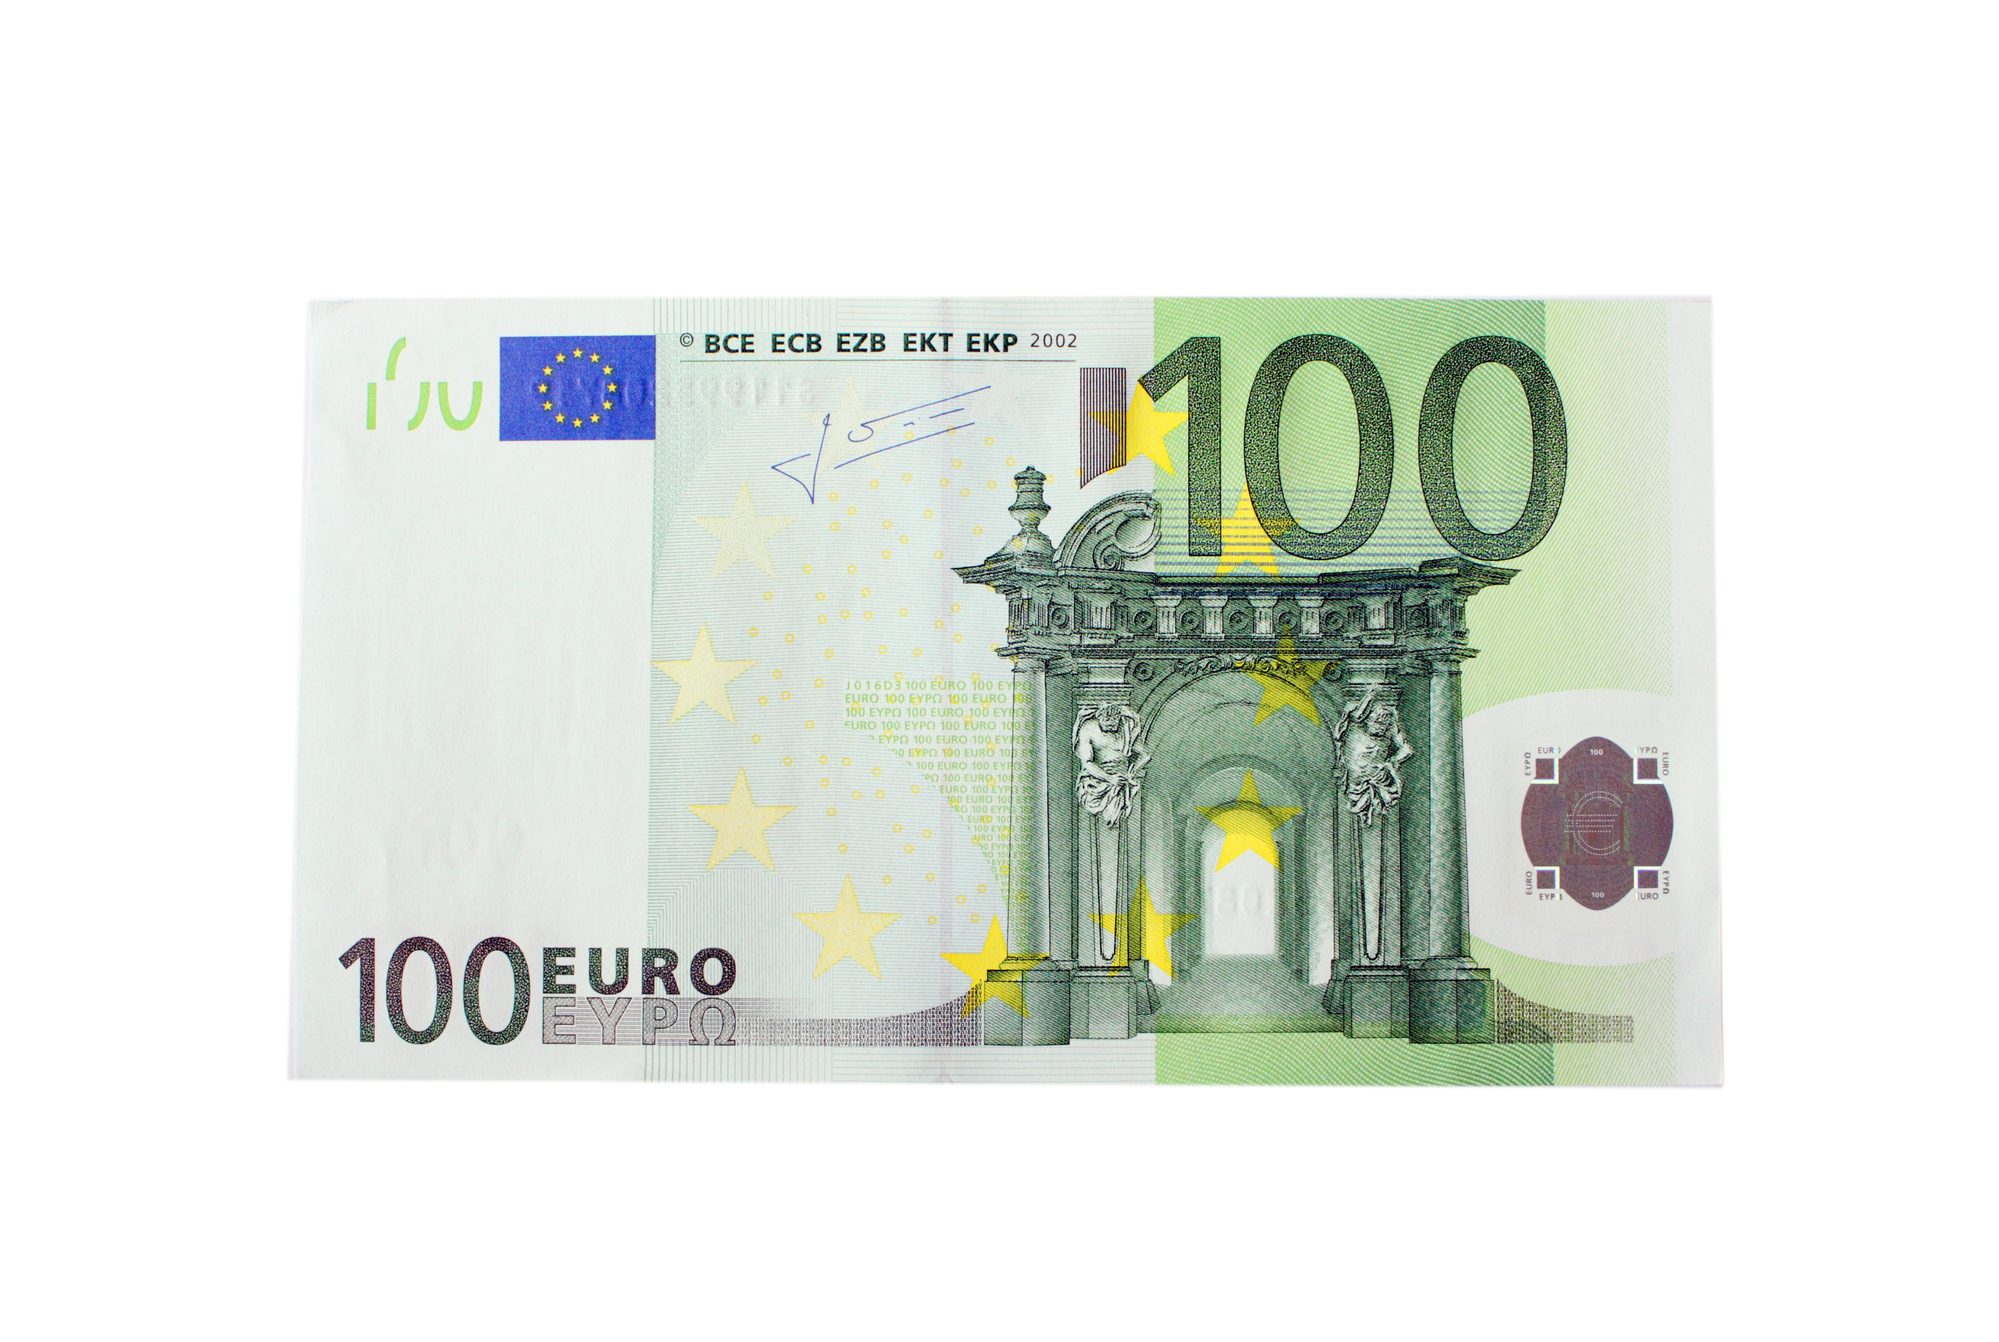 100 evra, foto: Depositphotos, blackan